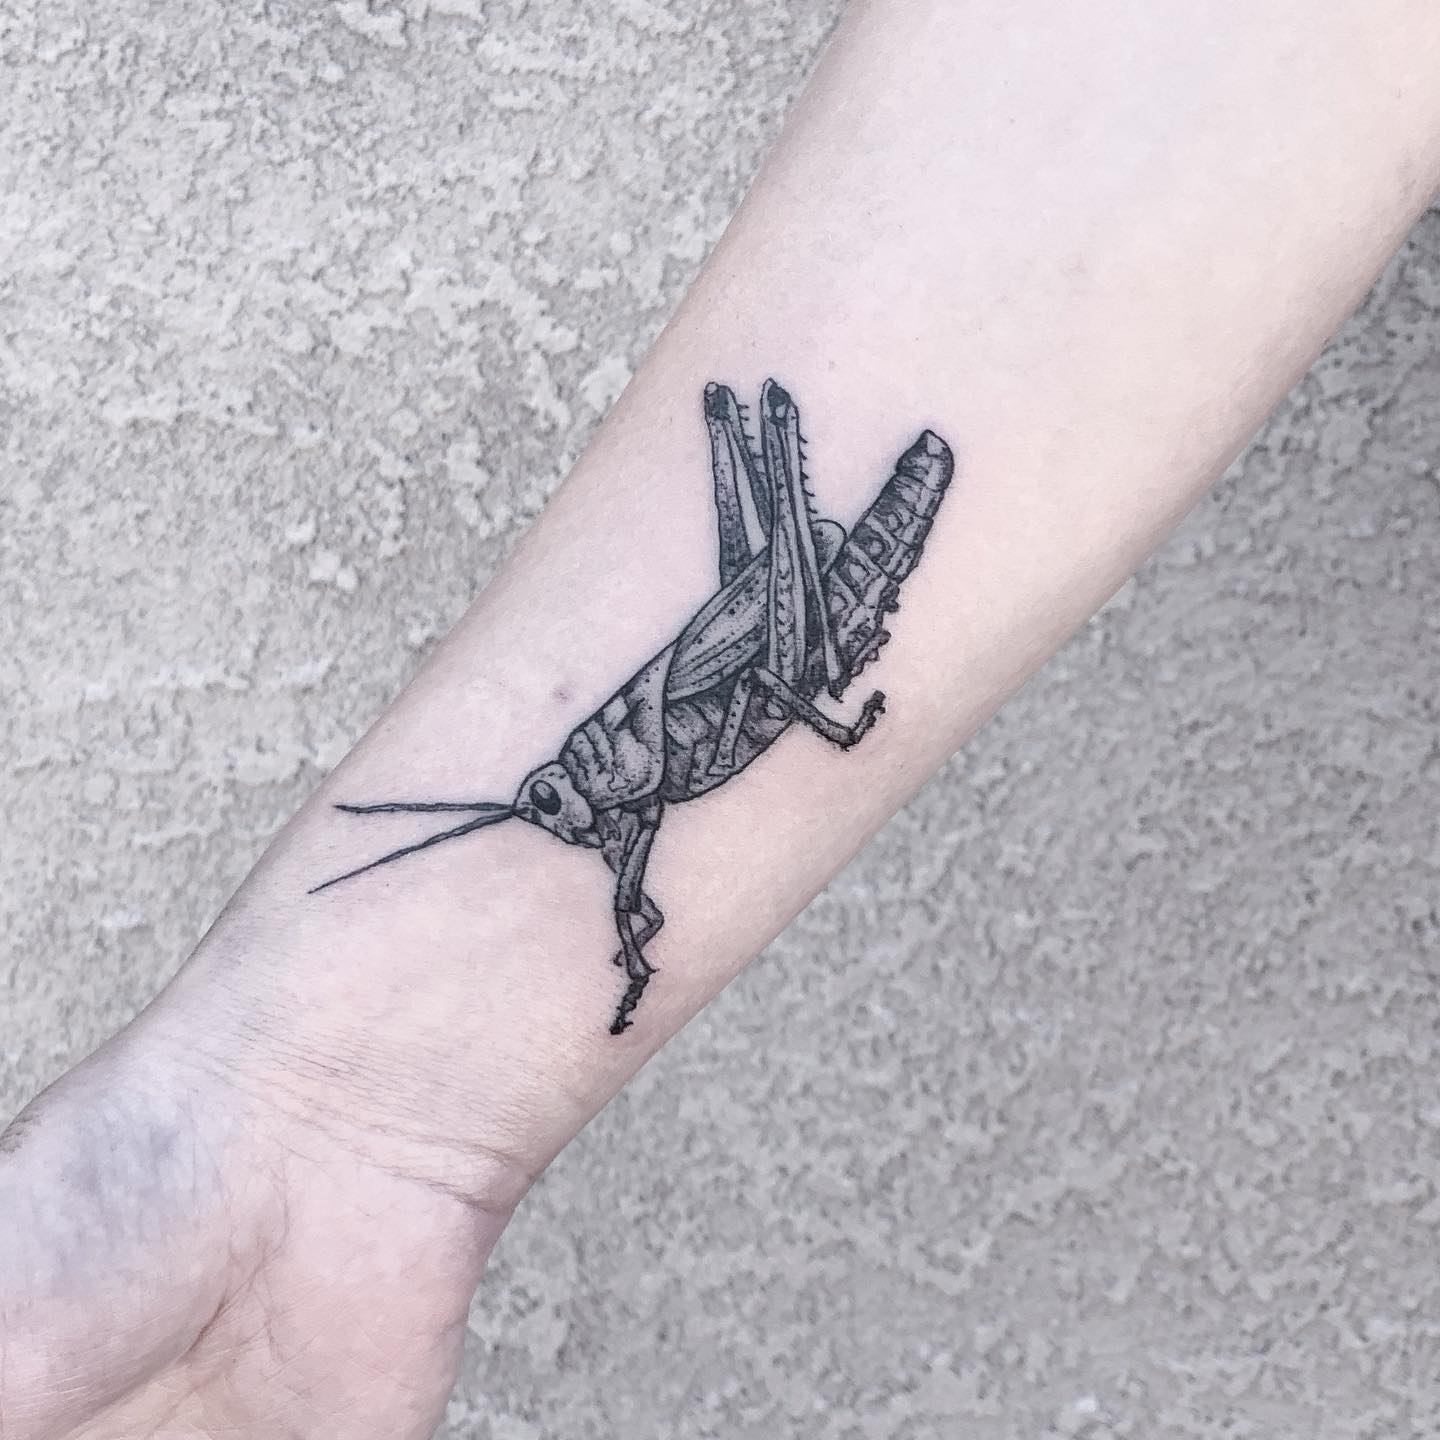 Grasshopper tattoo by fortytwojudges